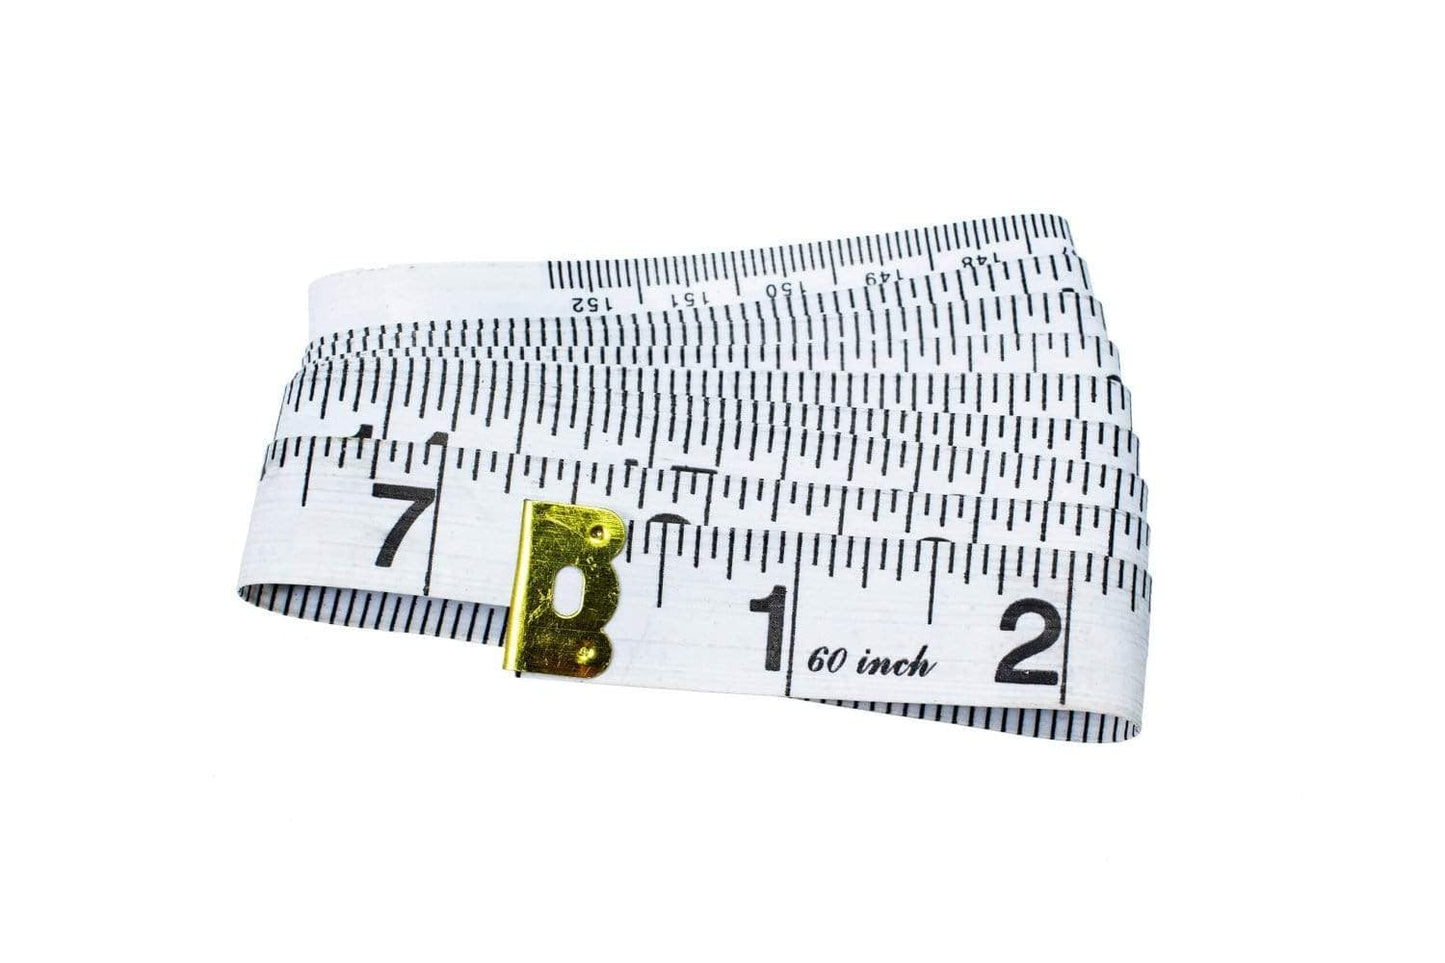 Retractable Tape Measure - 60in/150cm - Set of 30 - Measurement